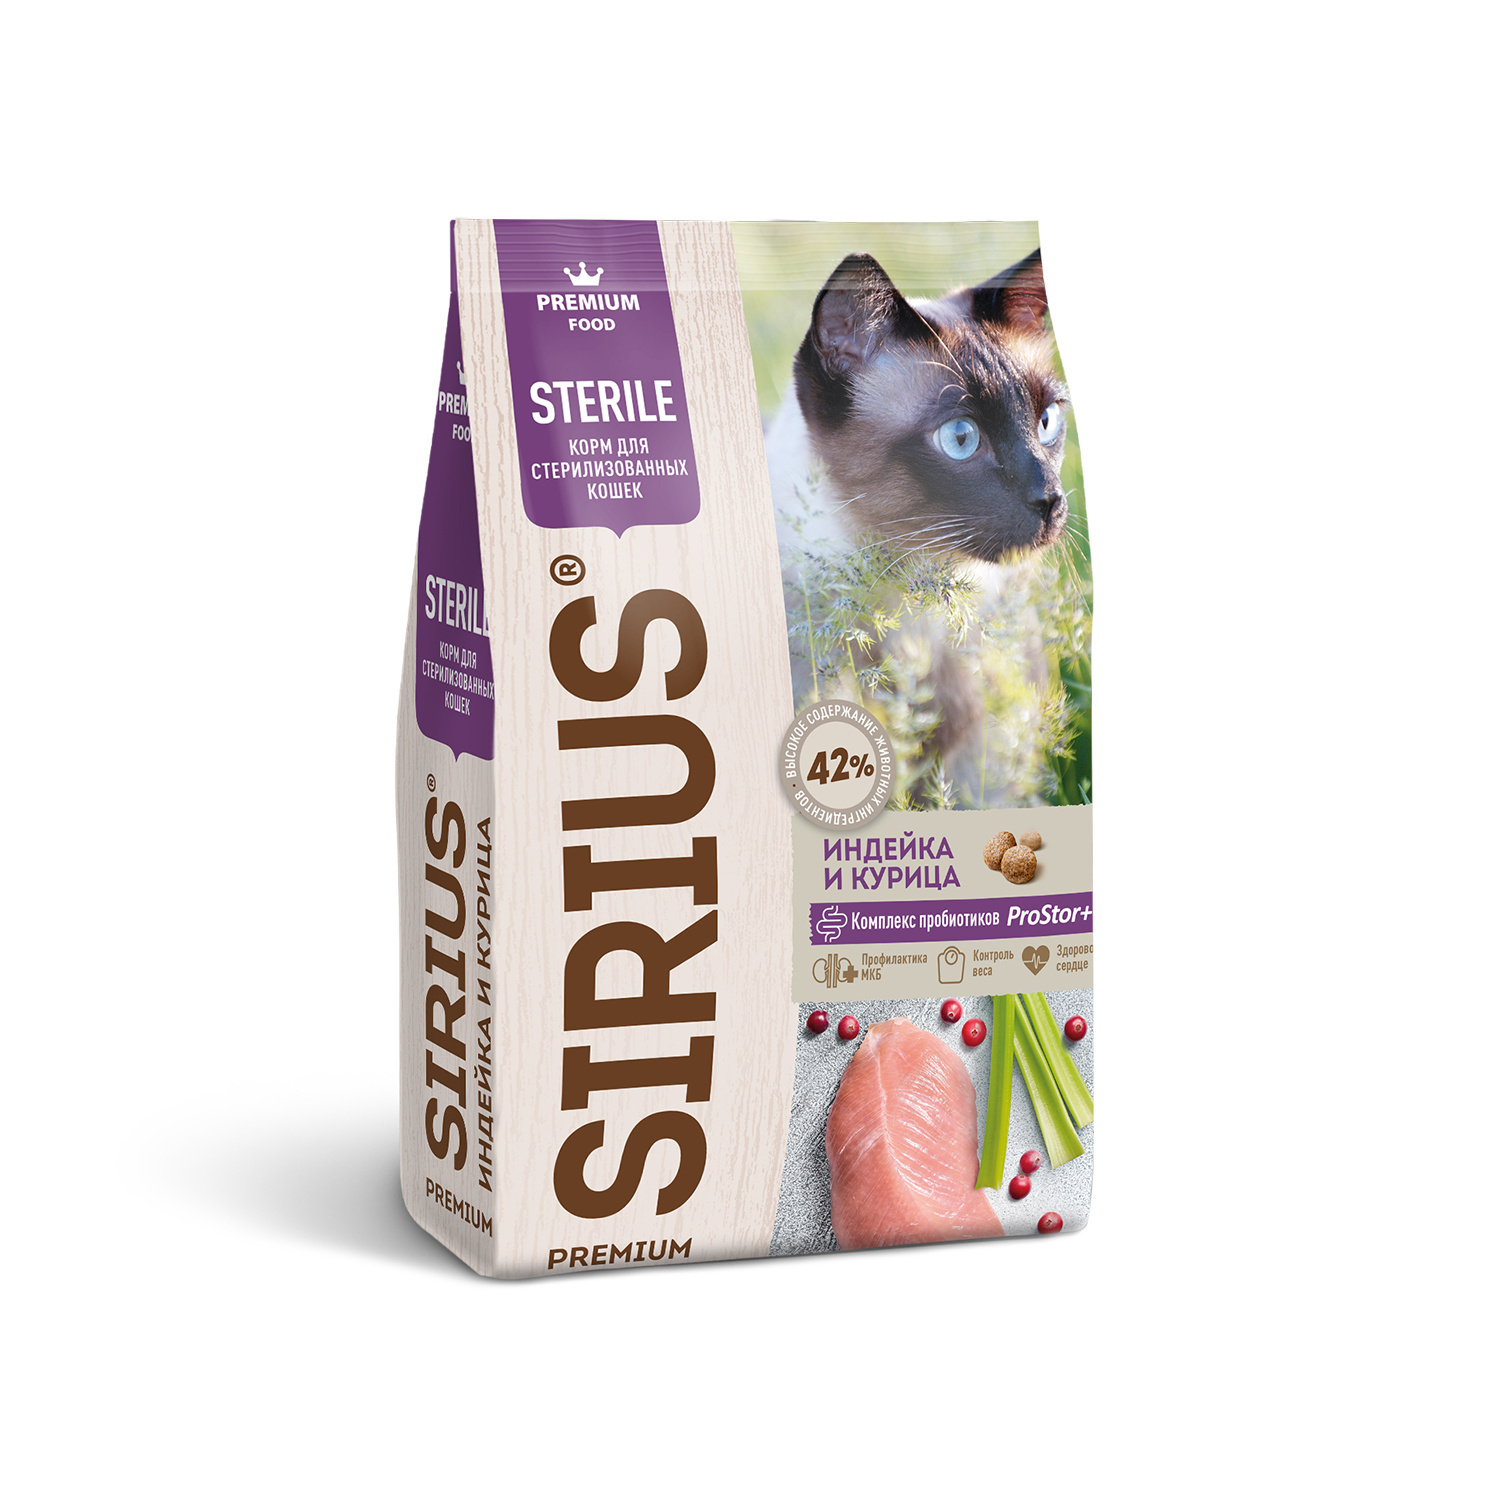 Sirius Sirius сухой корм для стерилизованных кошек, индейка и курица (10 кг) sirius sirius сухой корм для стерилизованных кошек индейка и курица 1 5 кг